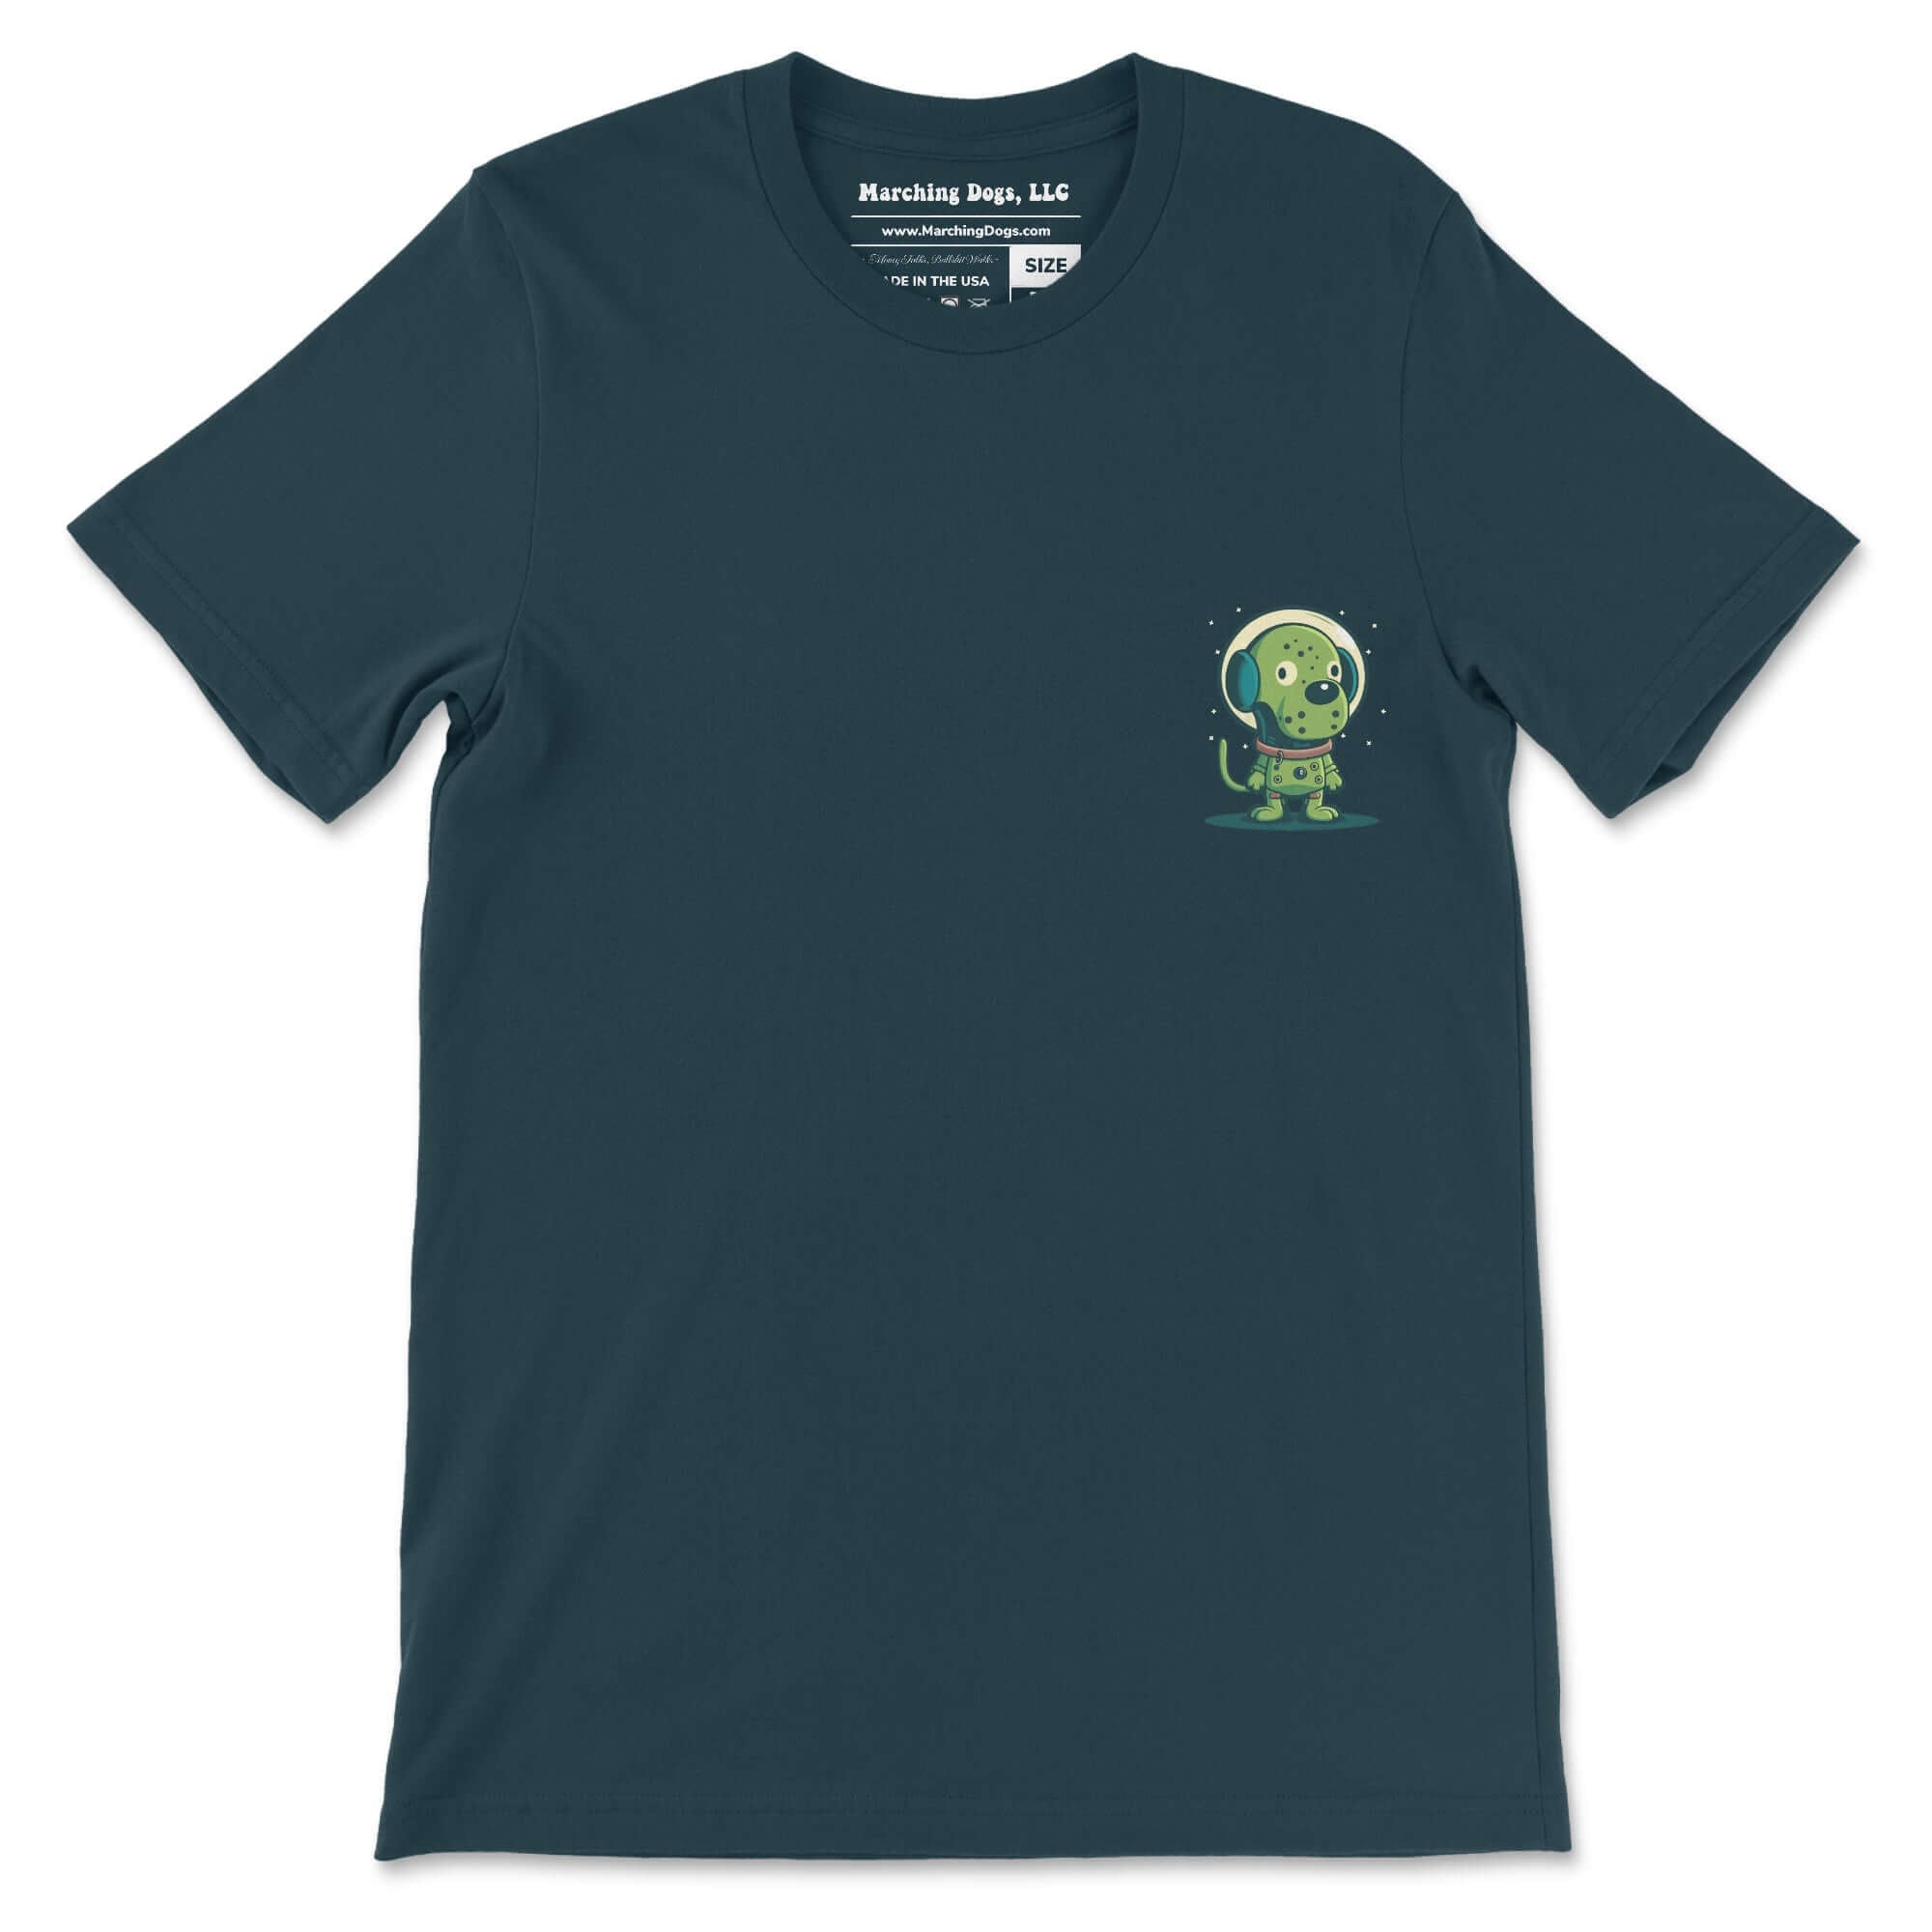 Camiseta con bolsillo 'Perro alienígena'